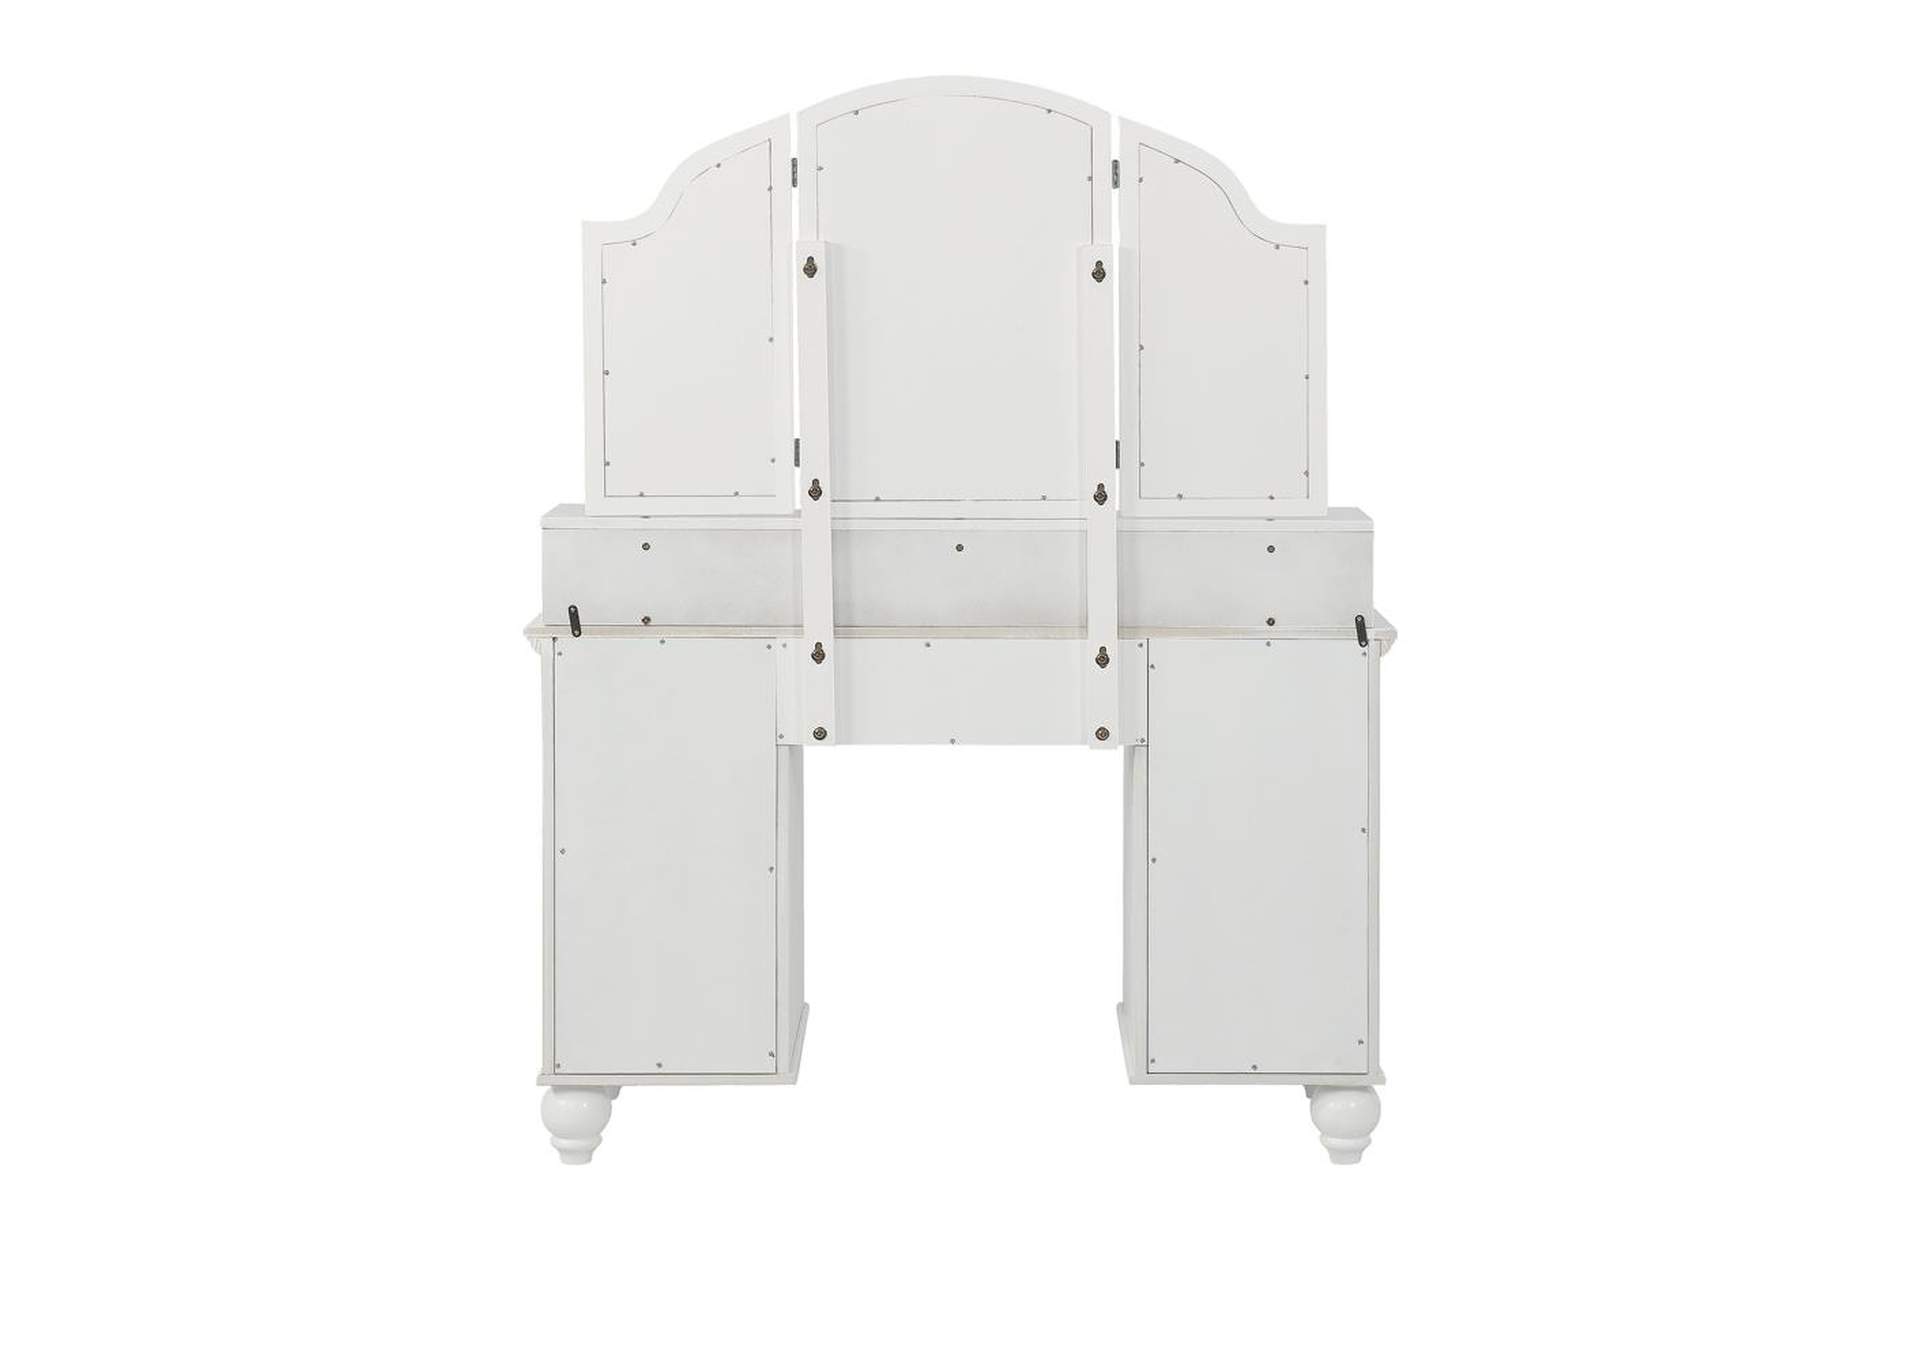 2-piece Vanity Set White and Beige,Coaster Furniture